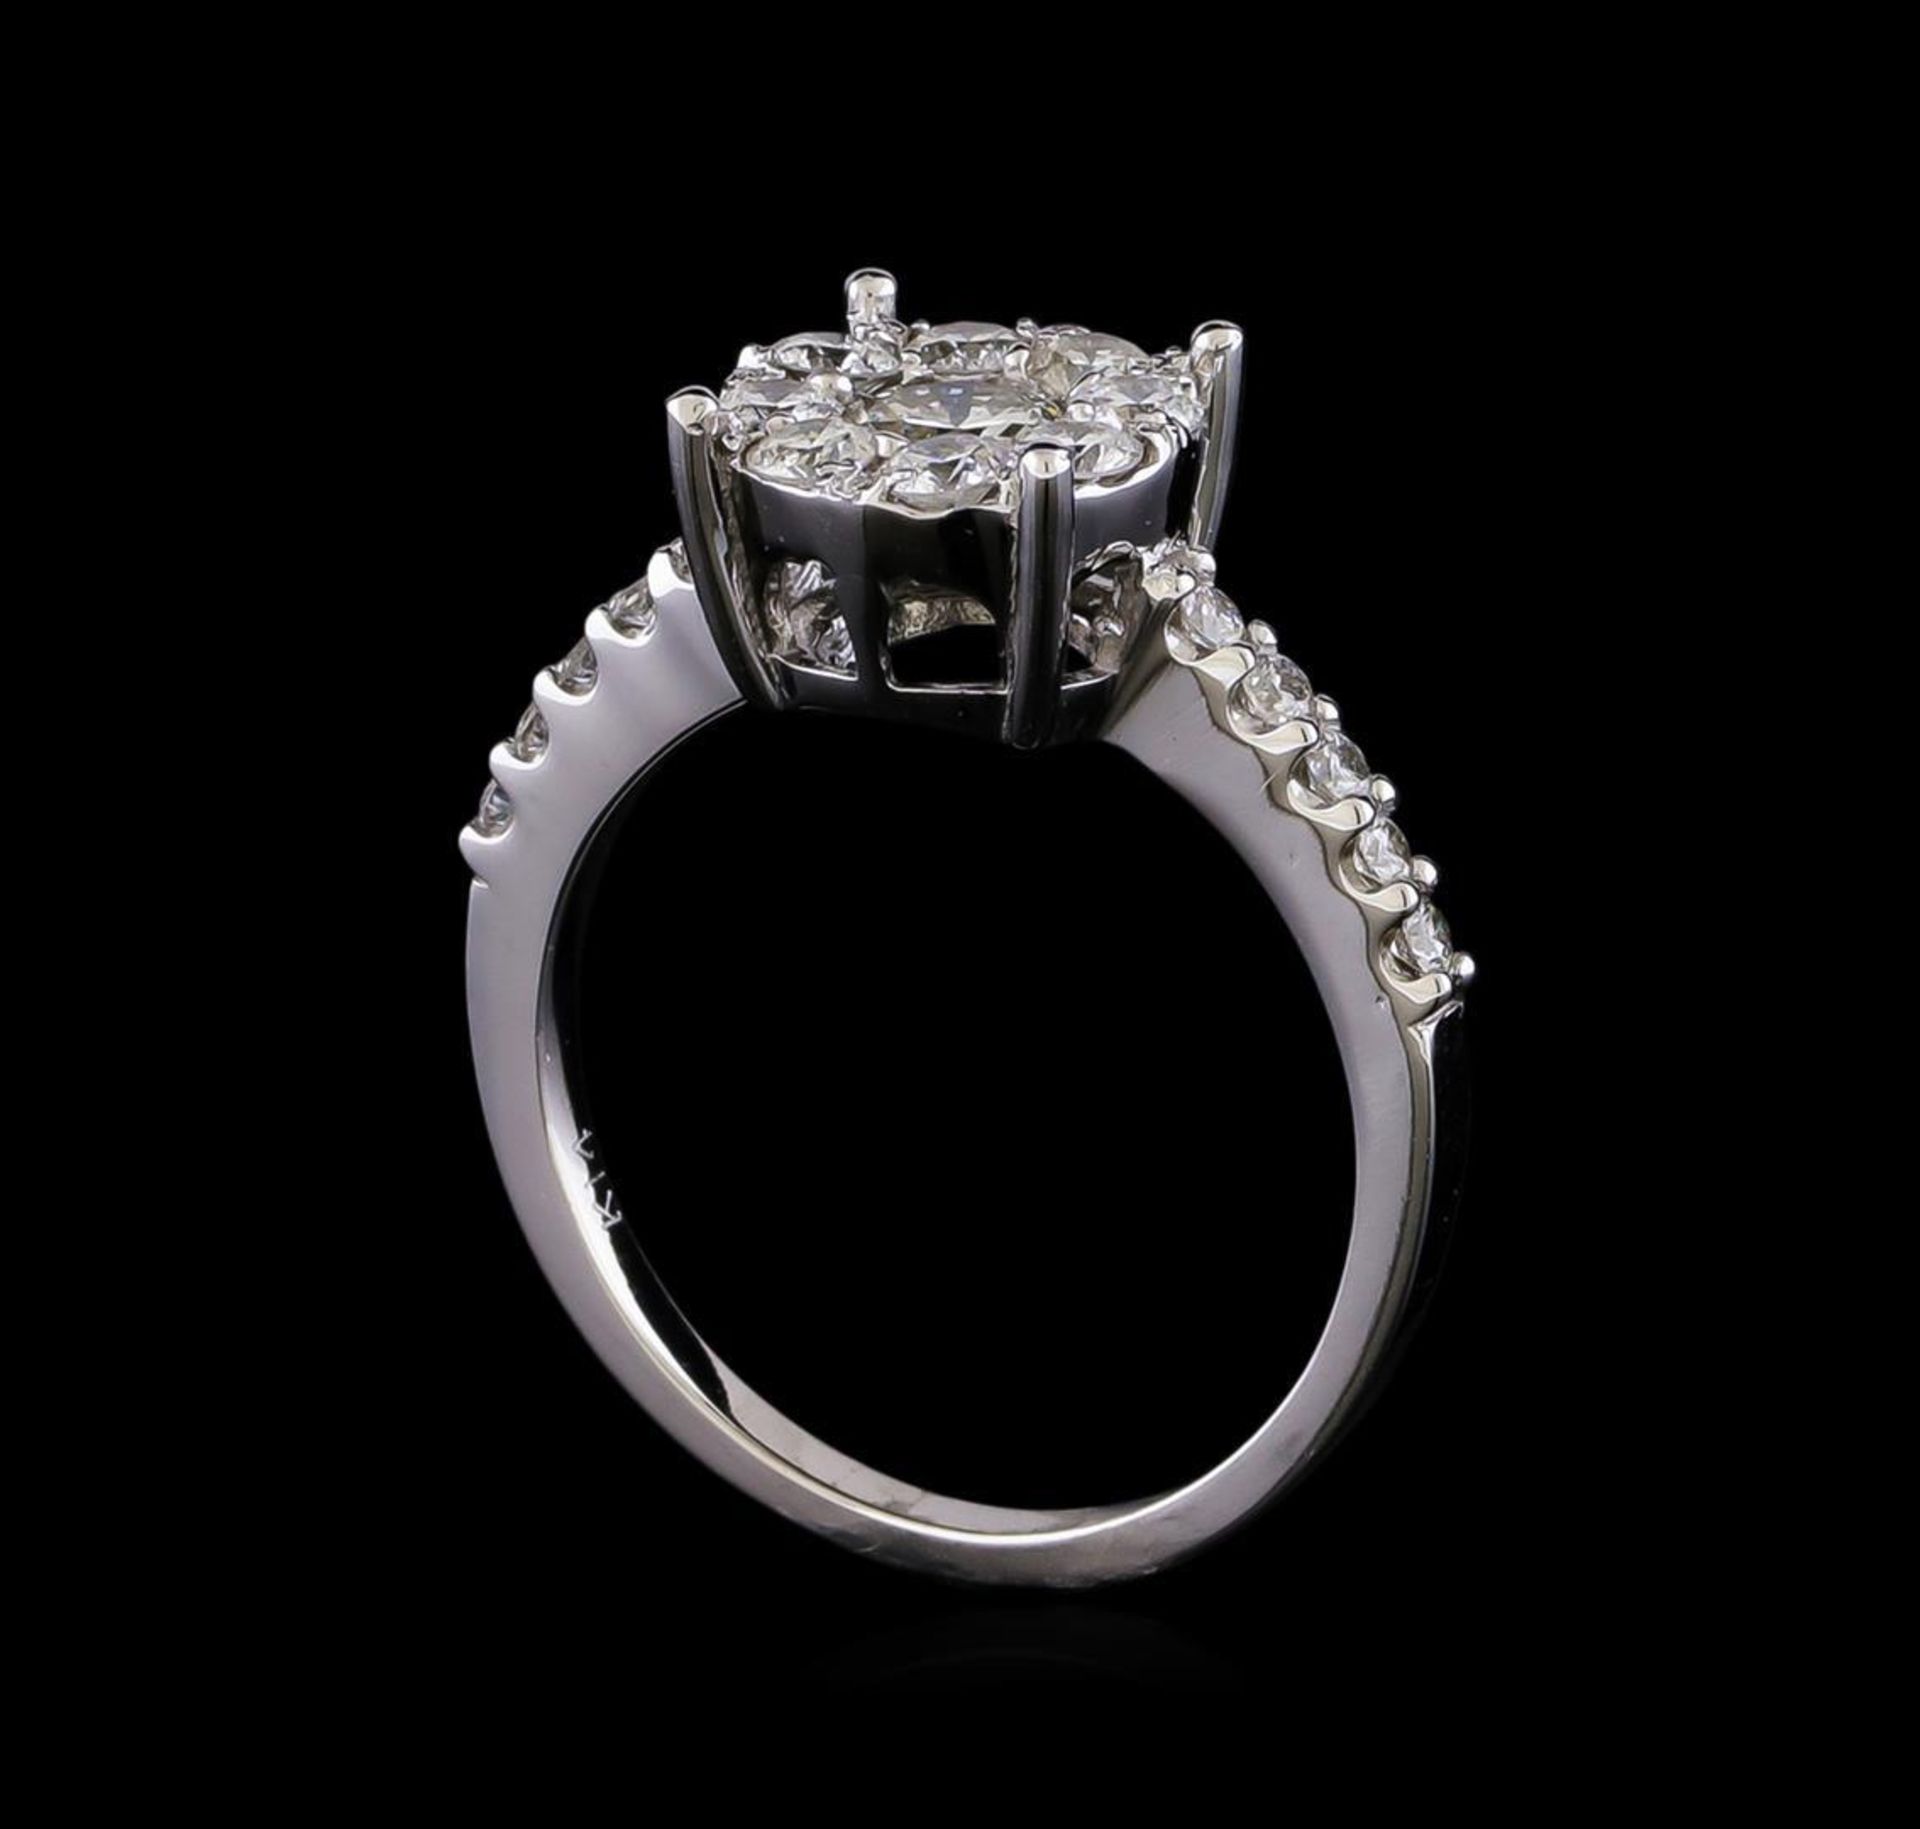 1.08 ctw Diamond Ring - 14KT White Gold - Image 4 of 5